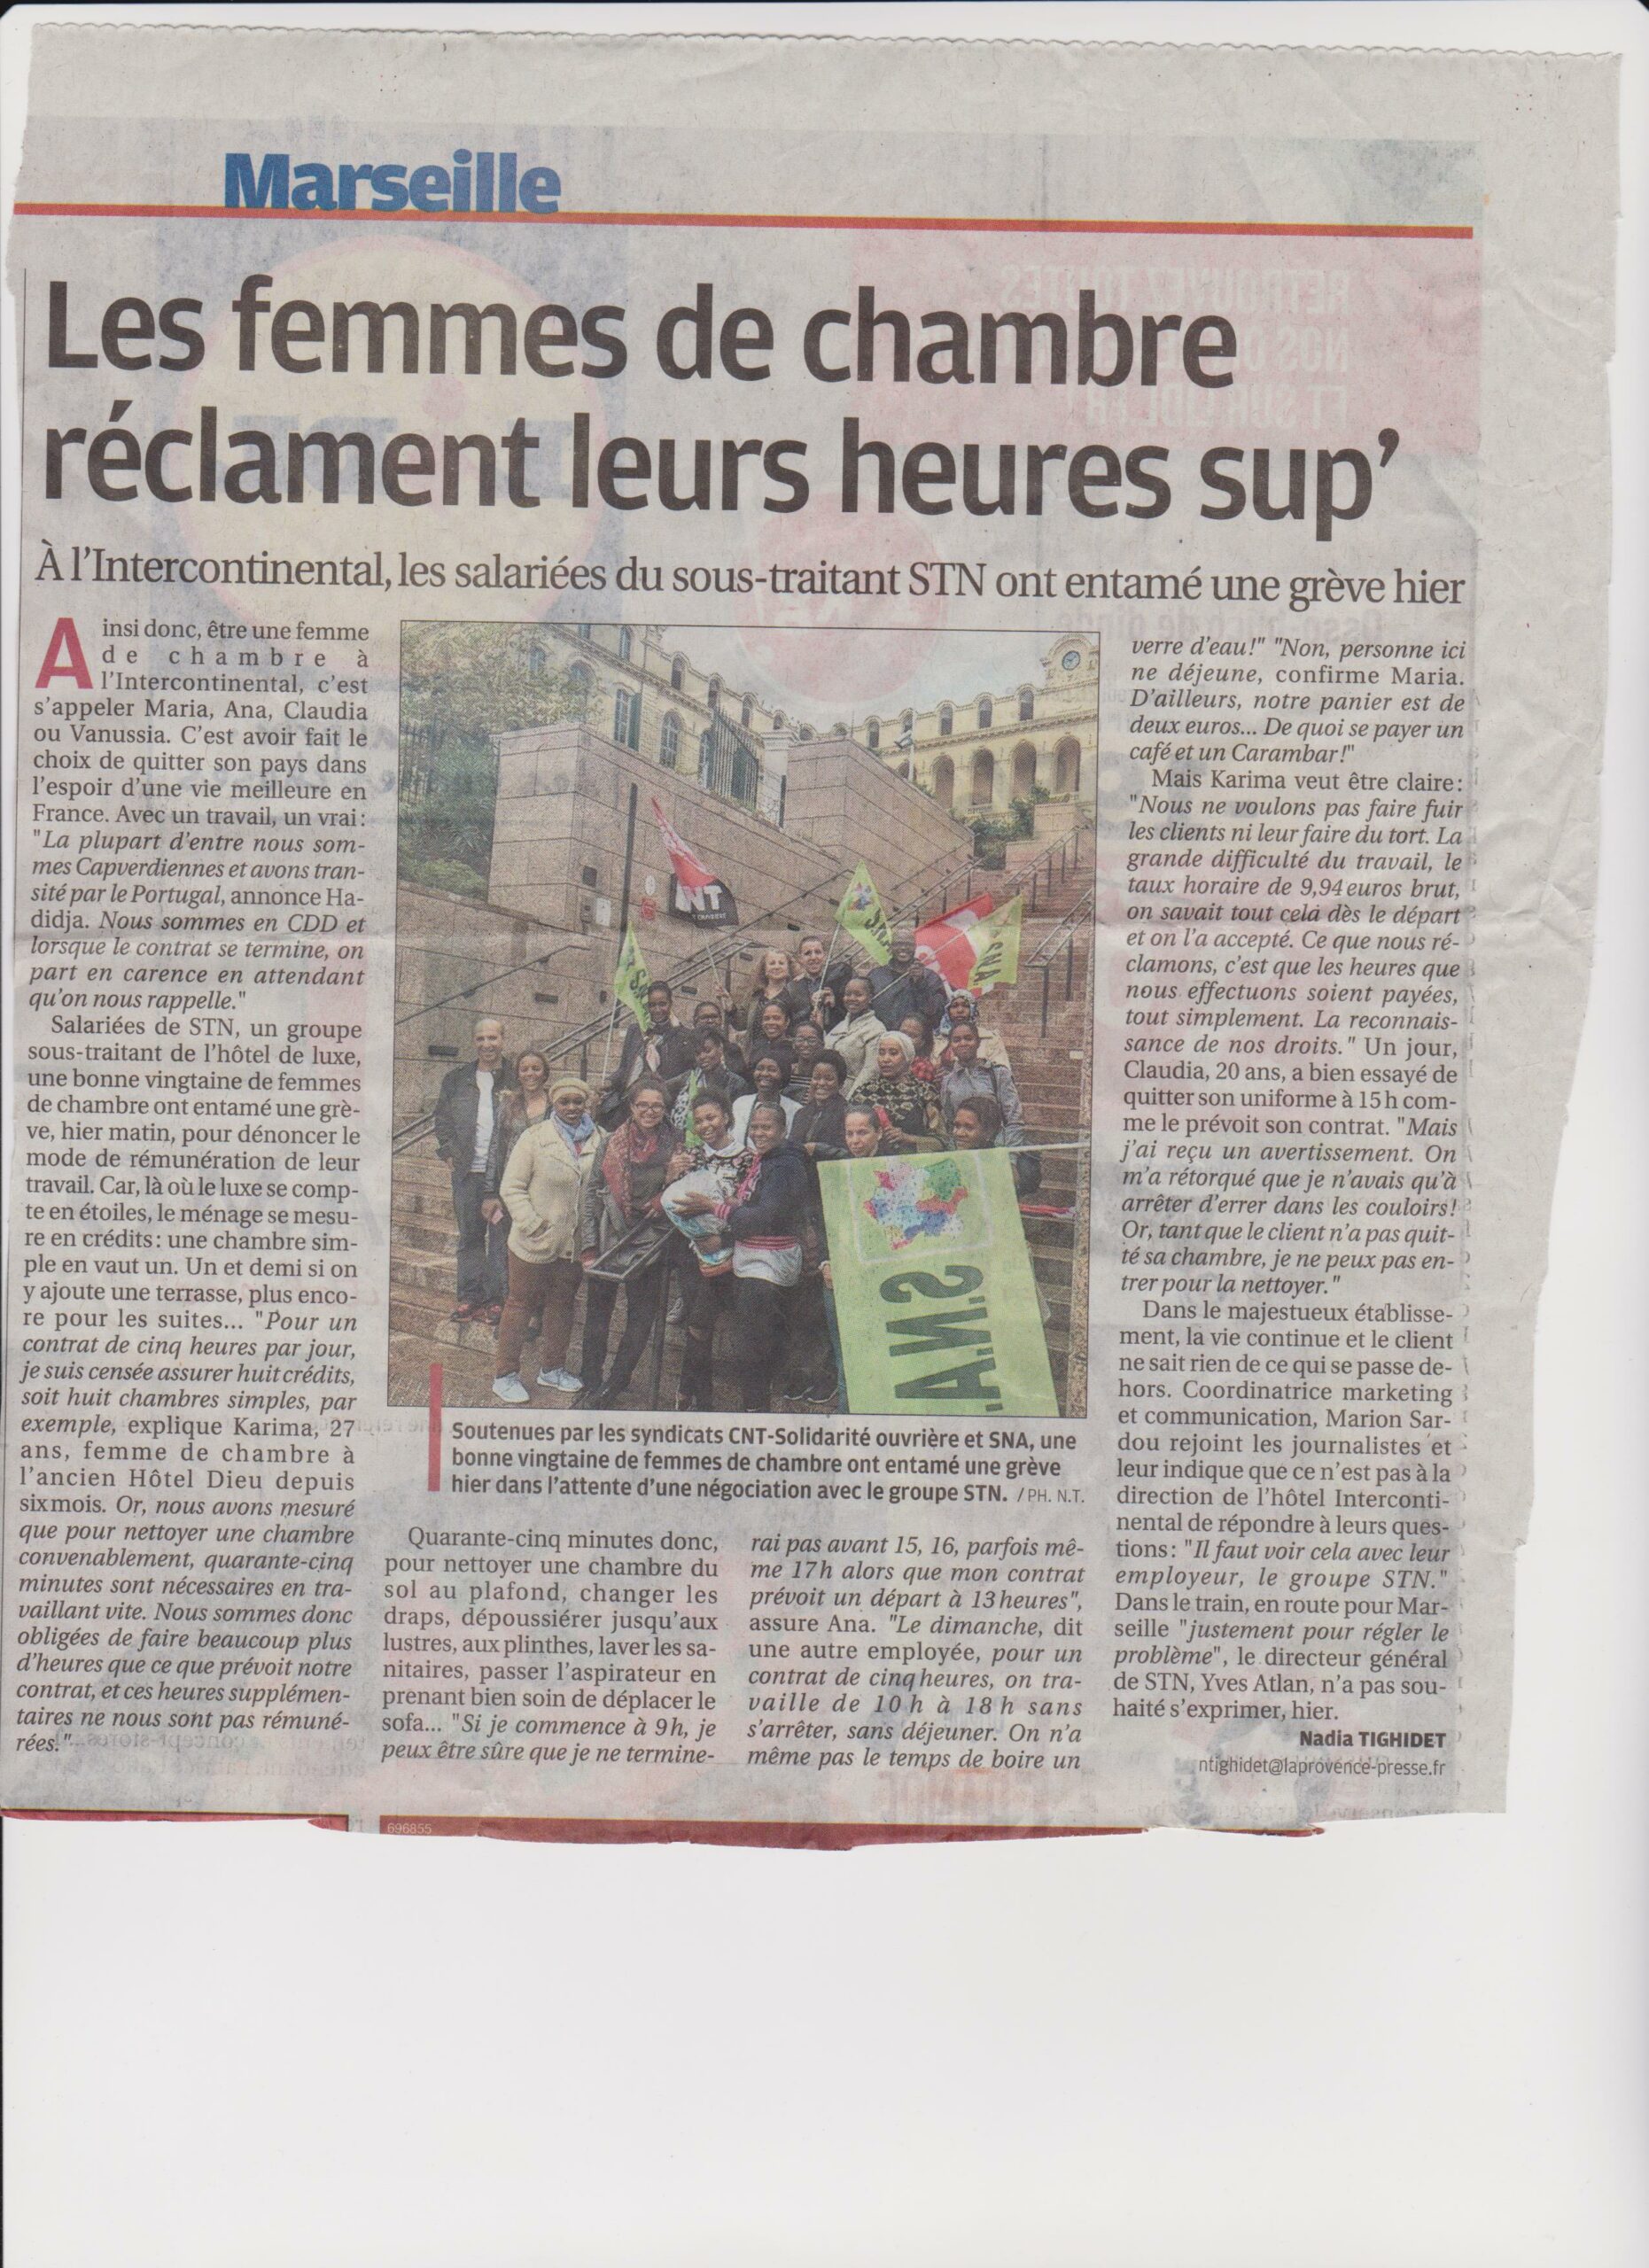 La Provence - article - 26oct16